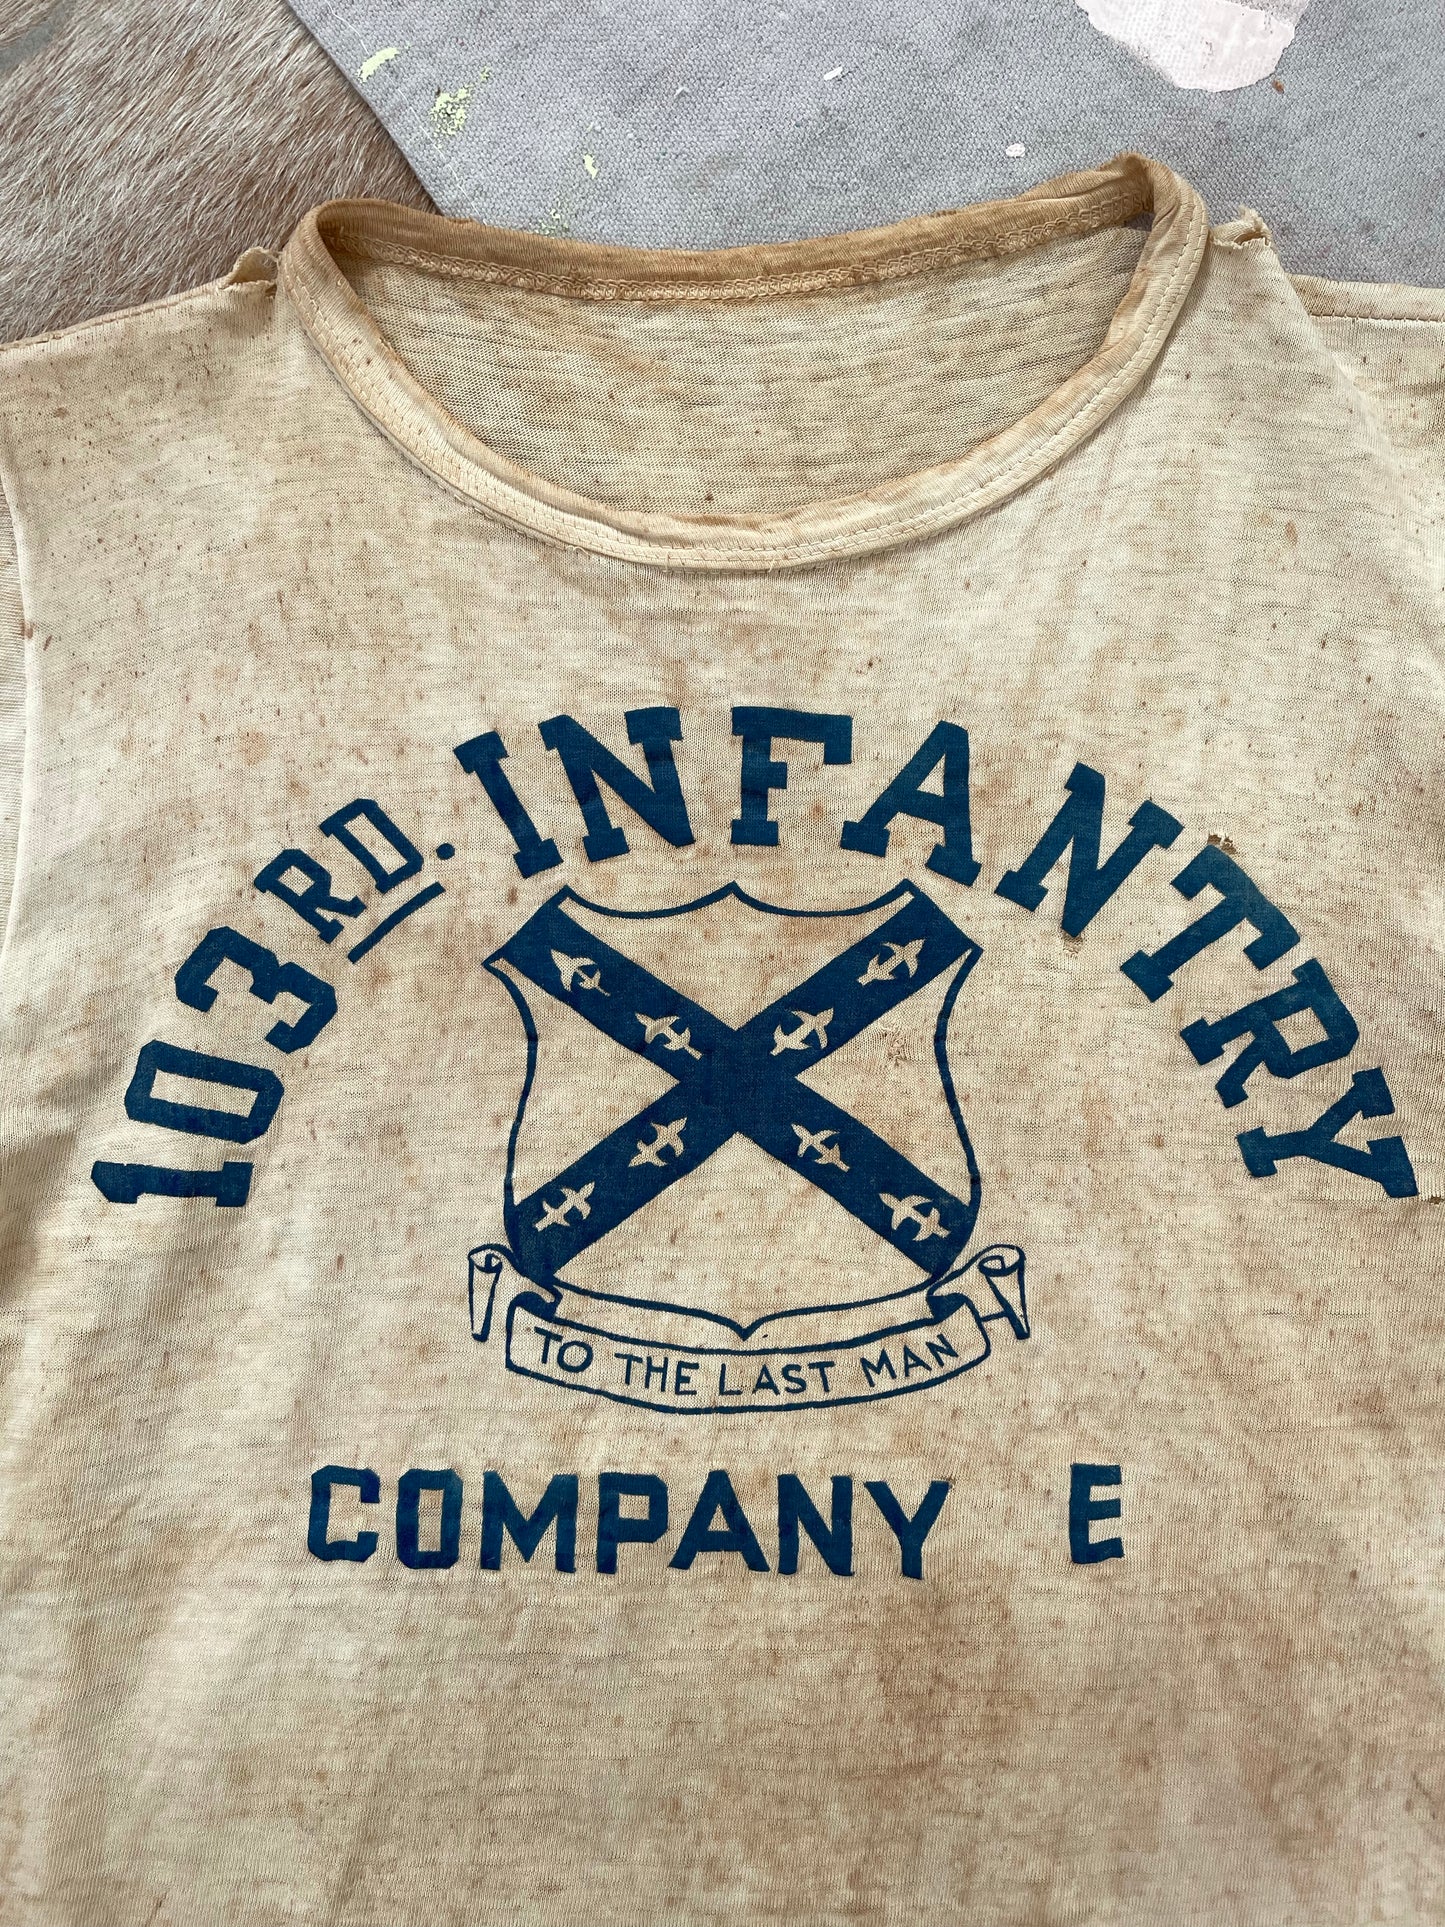 40s 103rd Infantry Company E Tee